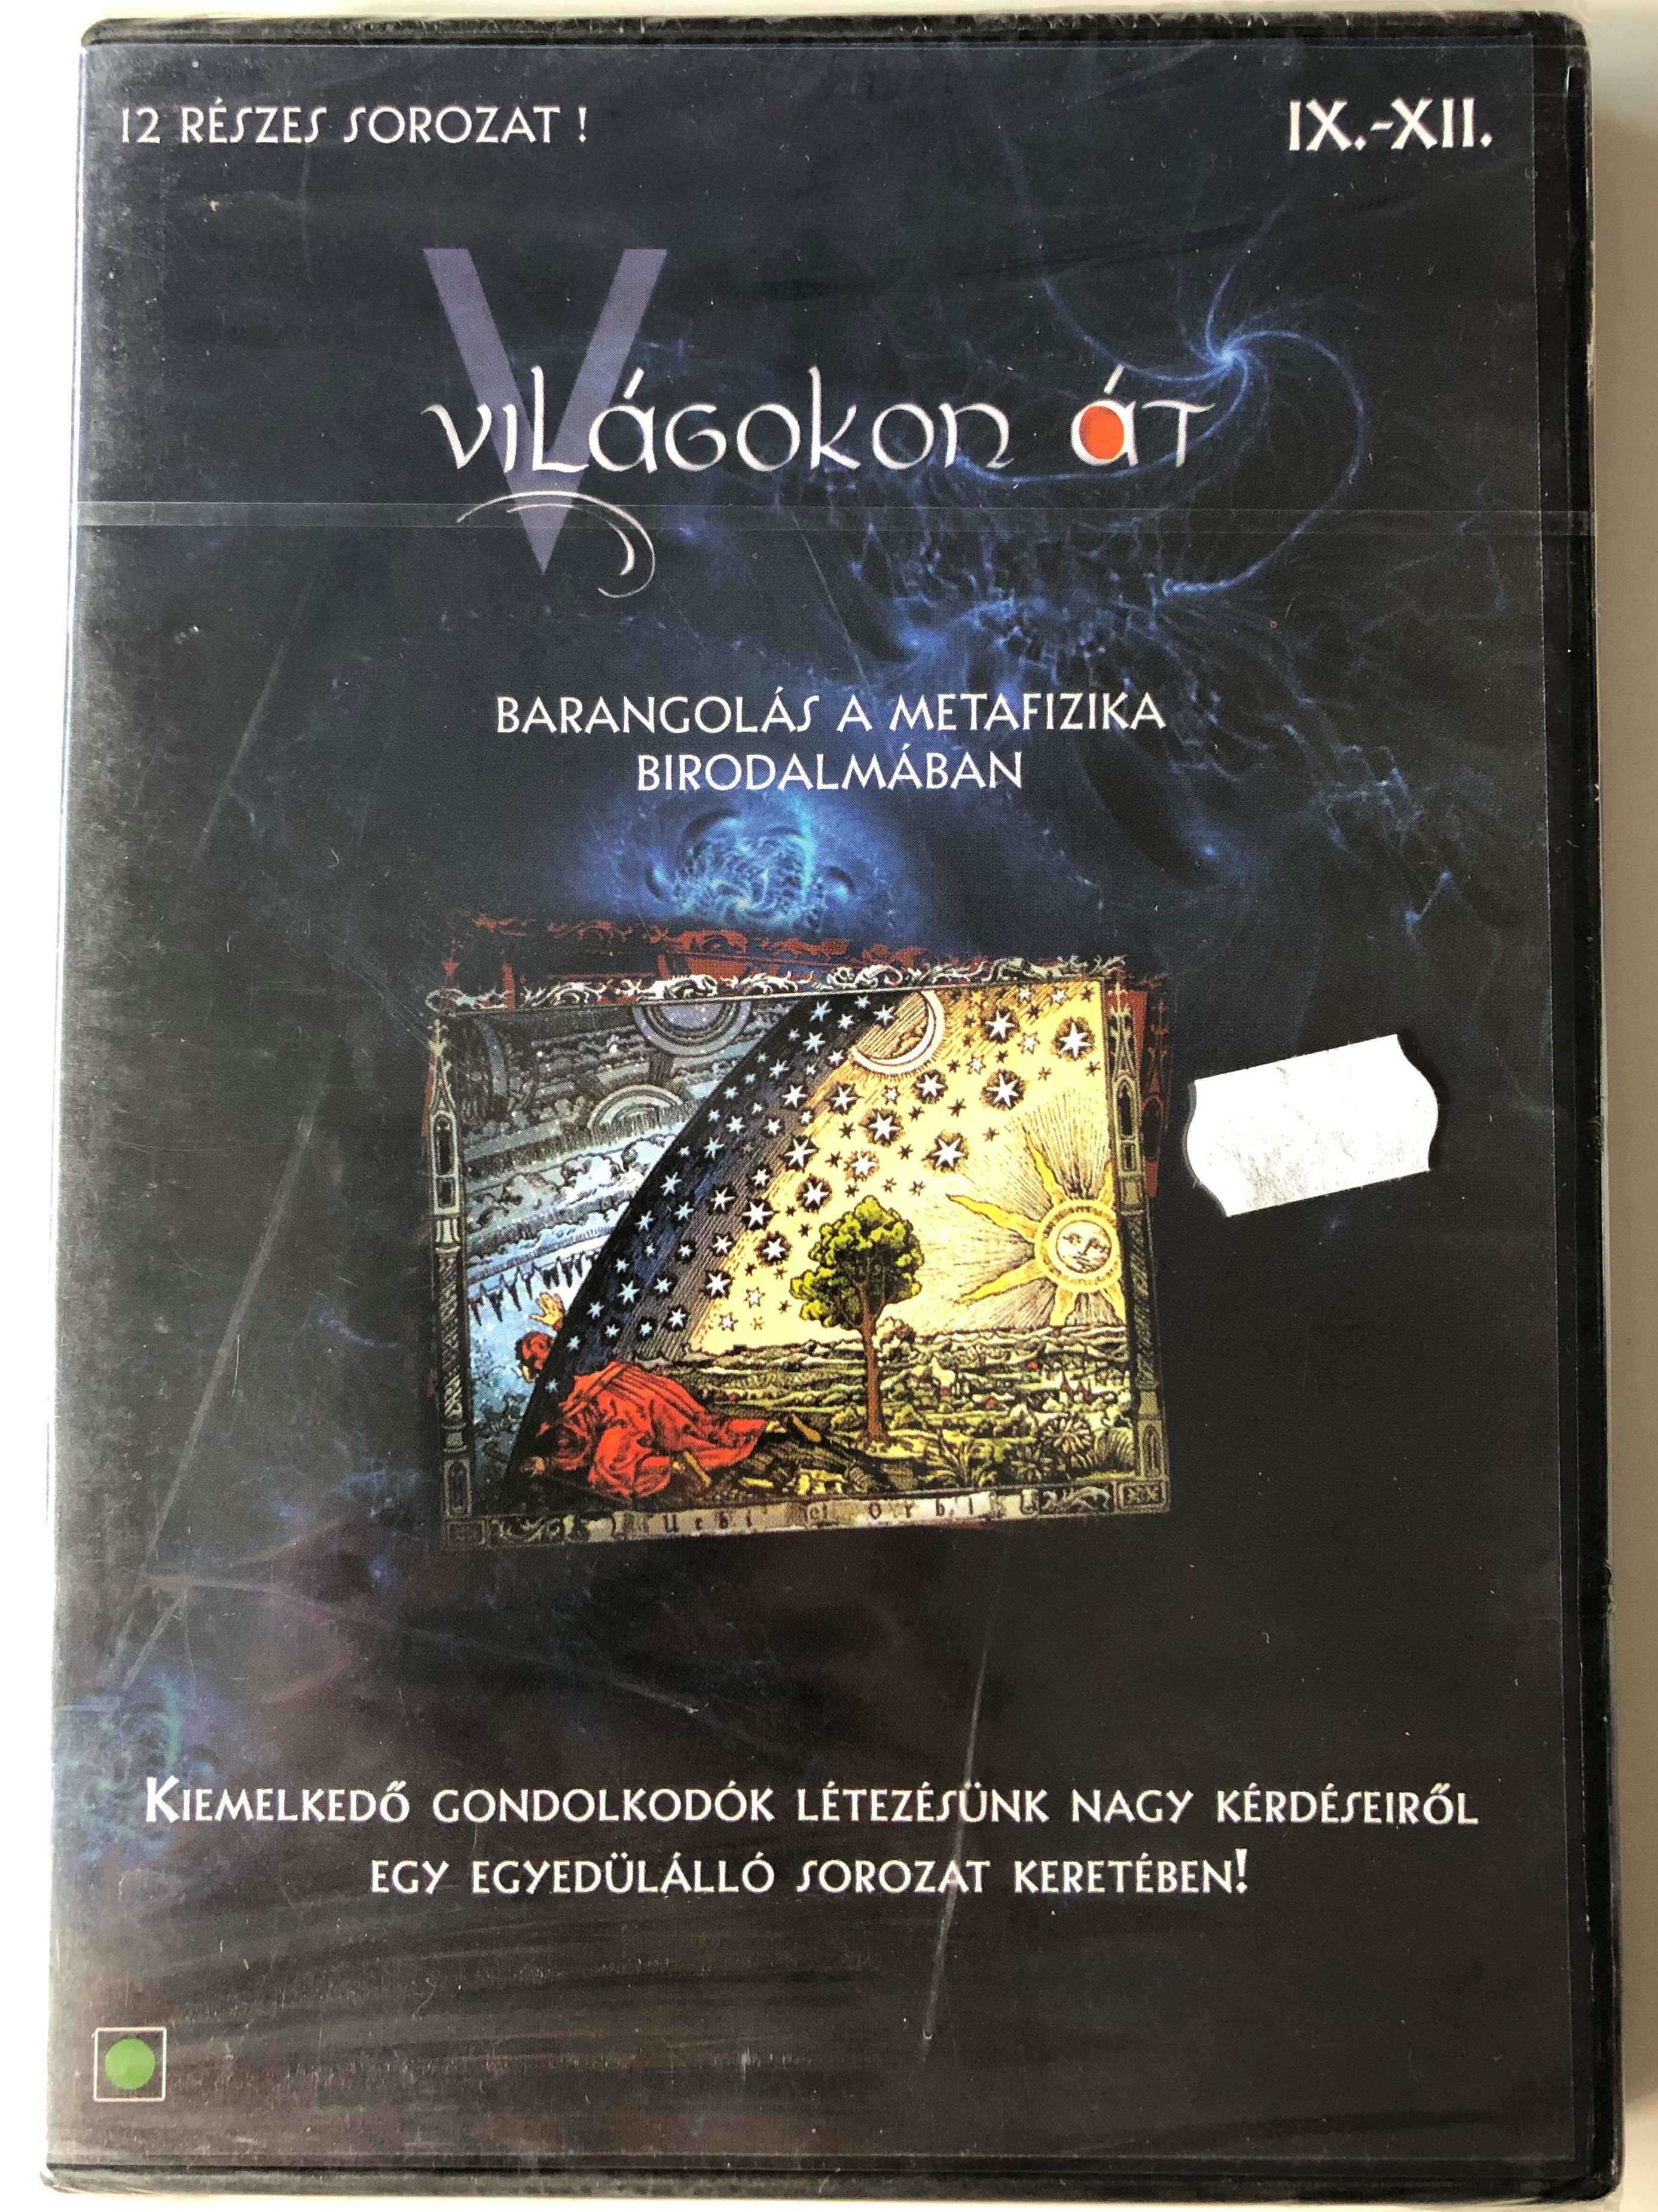 vil-gokon-t-dvd-2001-across-worlds-1.jpg